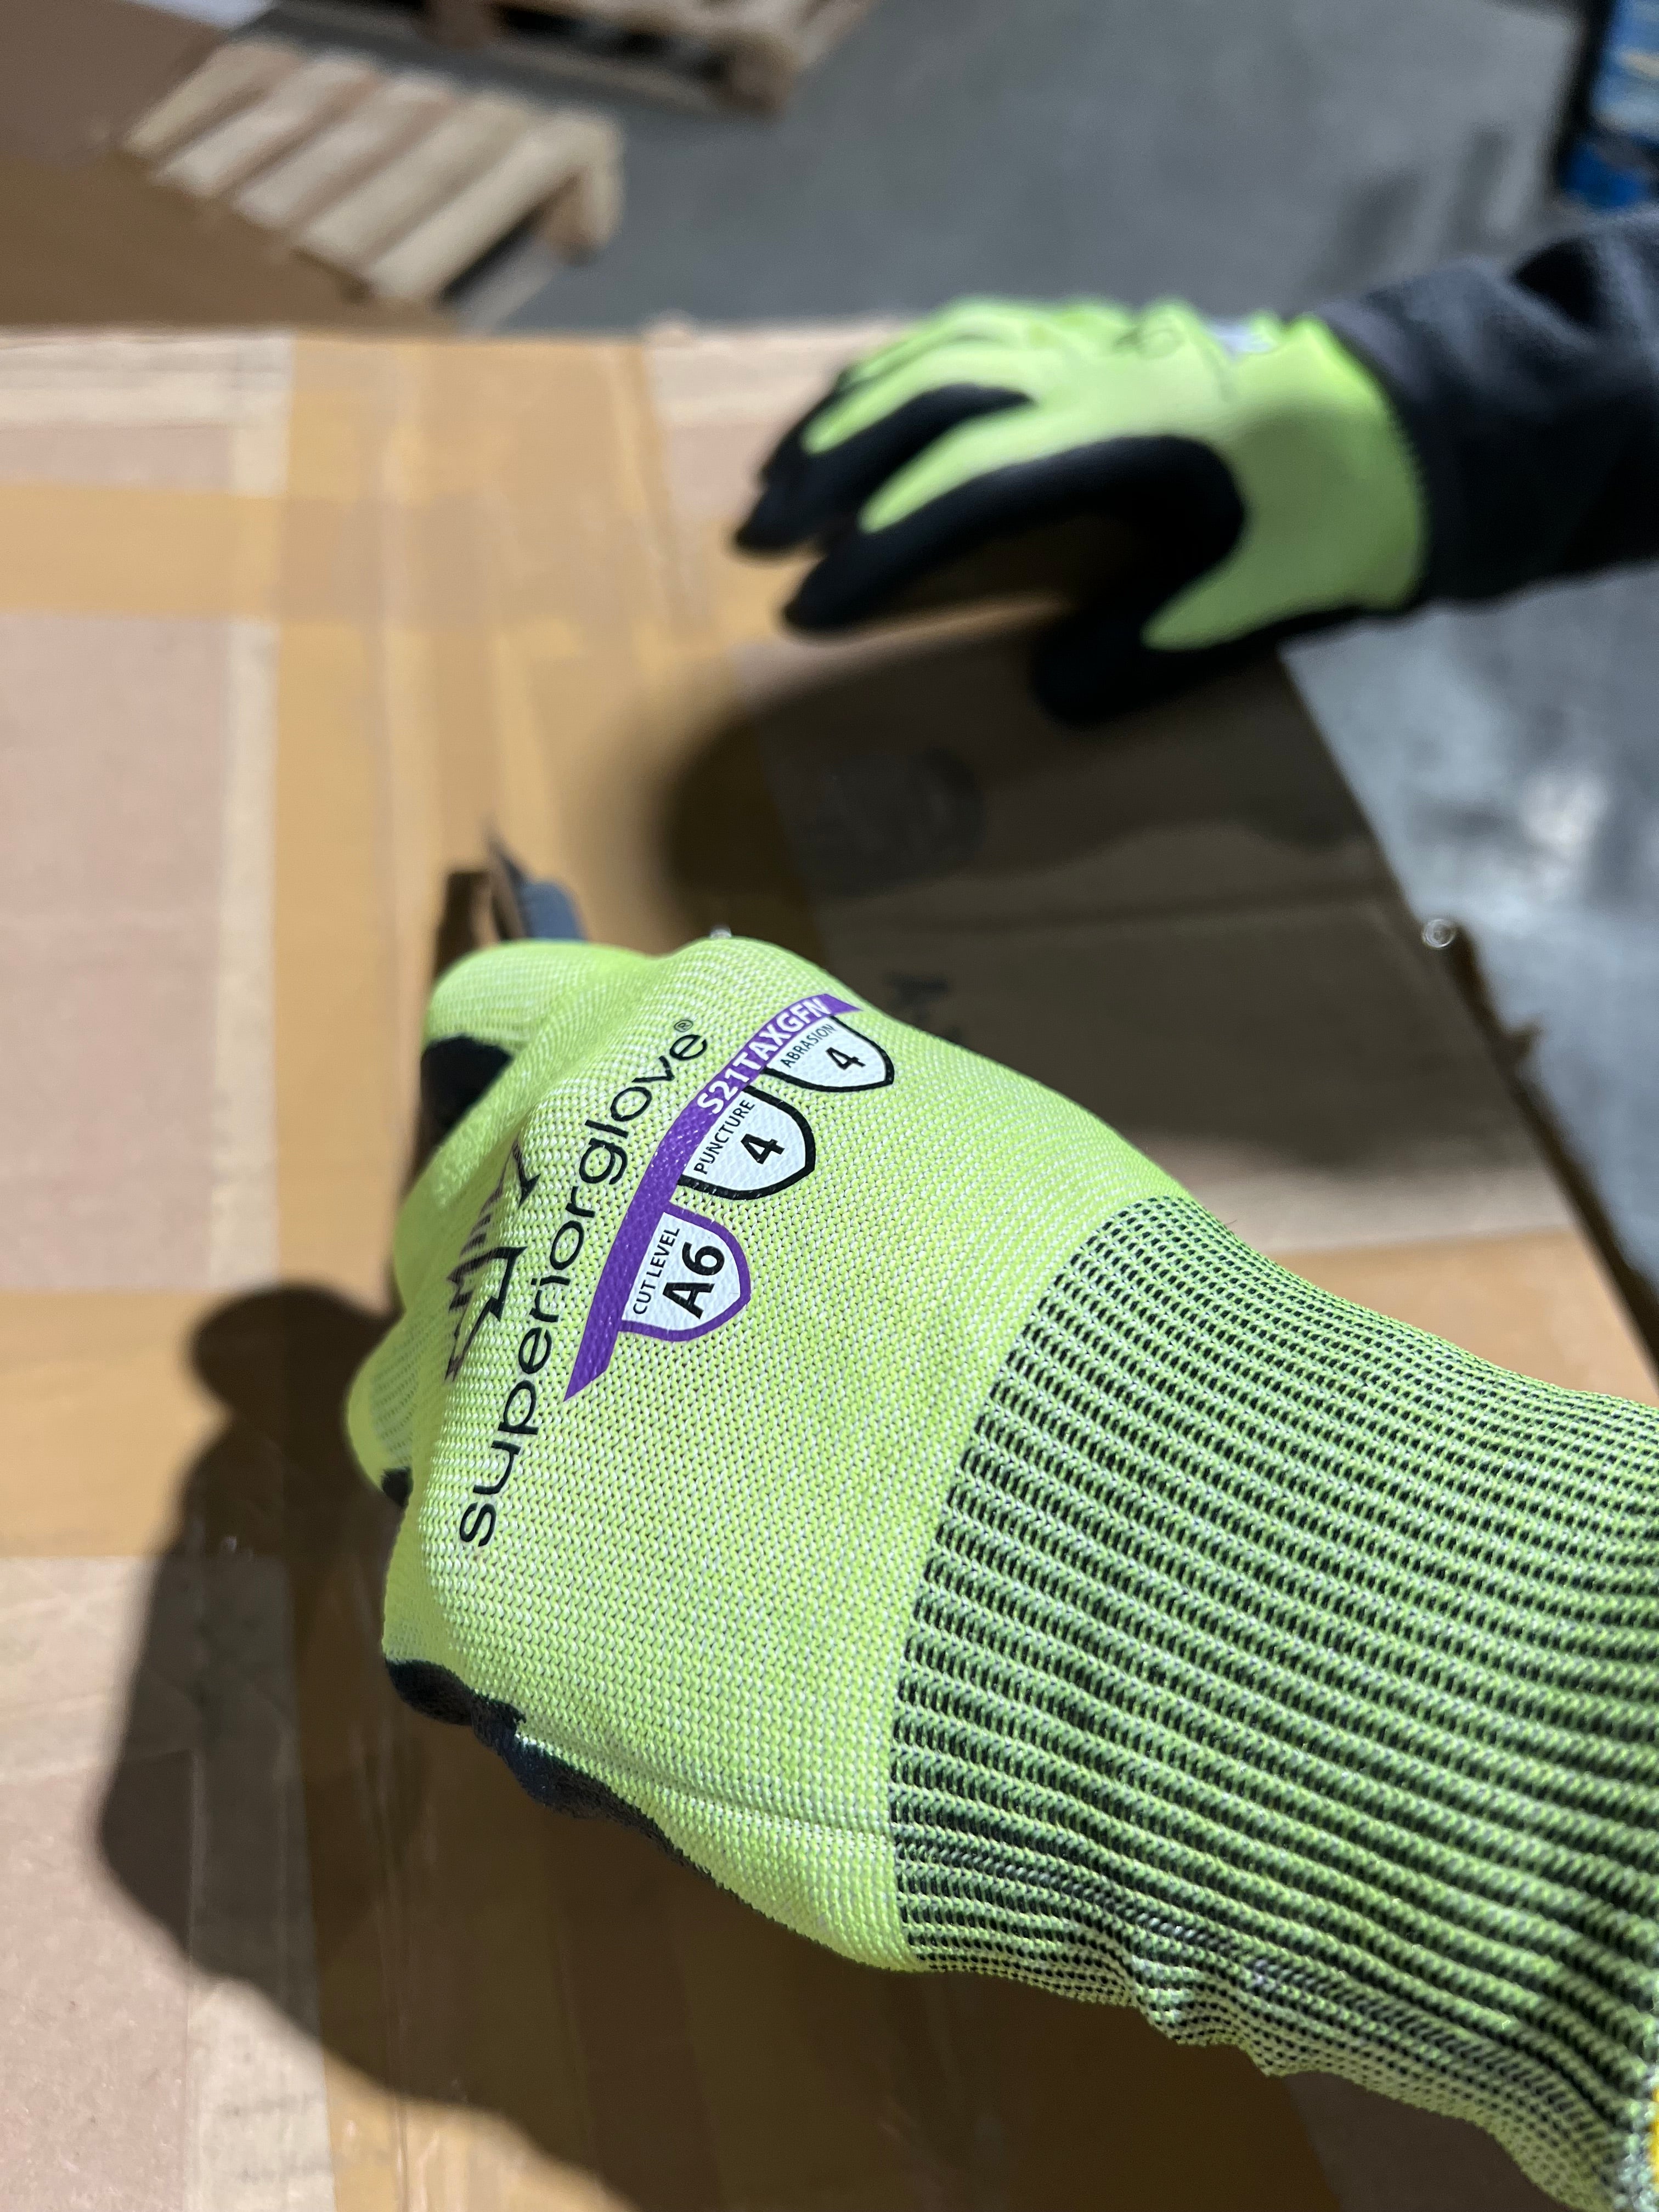 TASK GLOVES - Anti-Cut Gloves, composite cloth palm ANSI A6